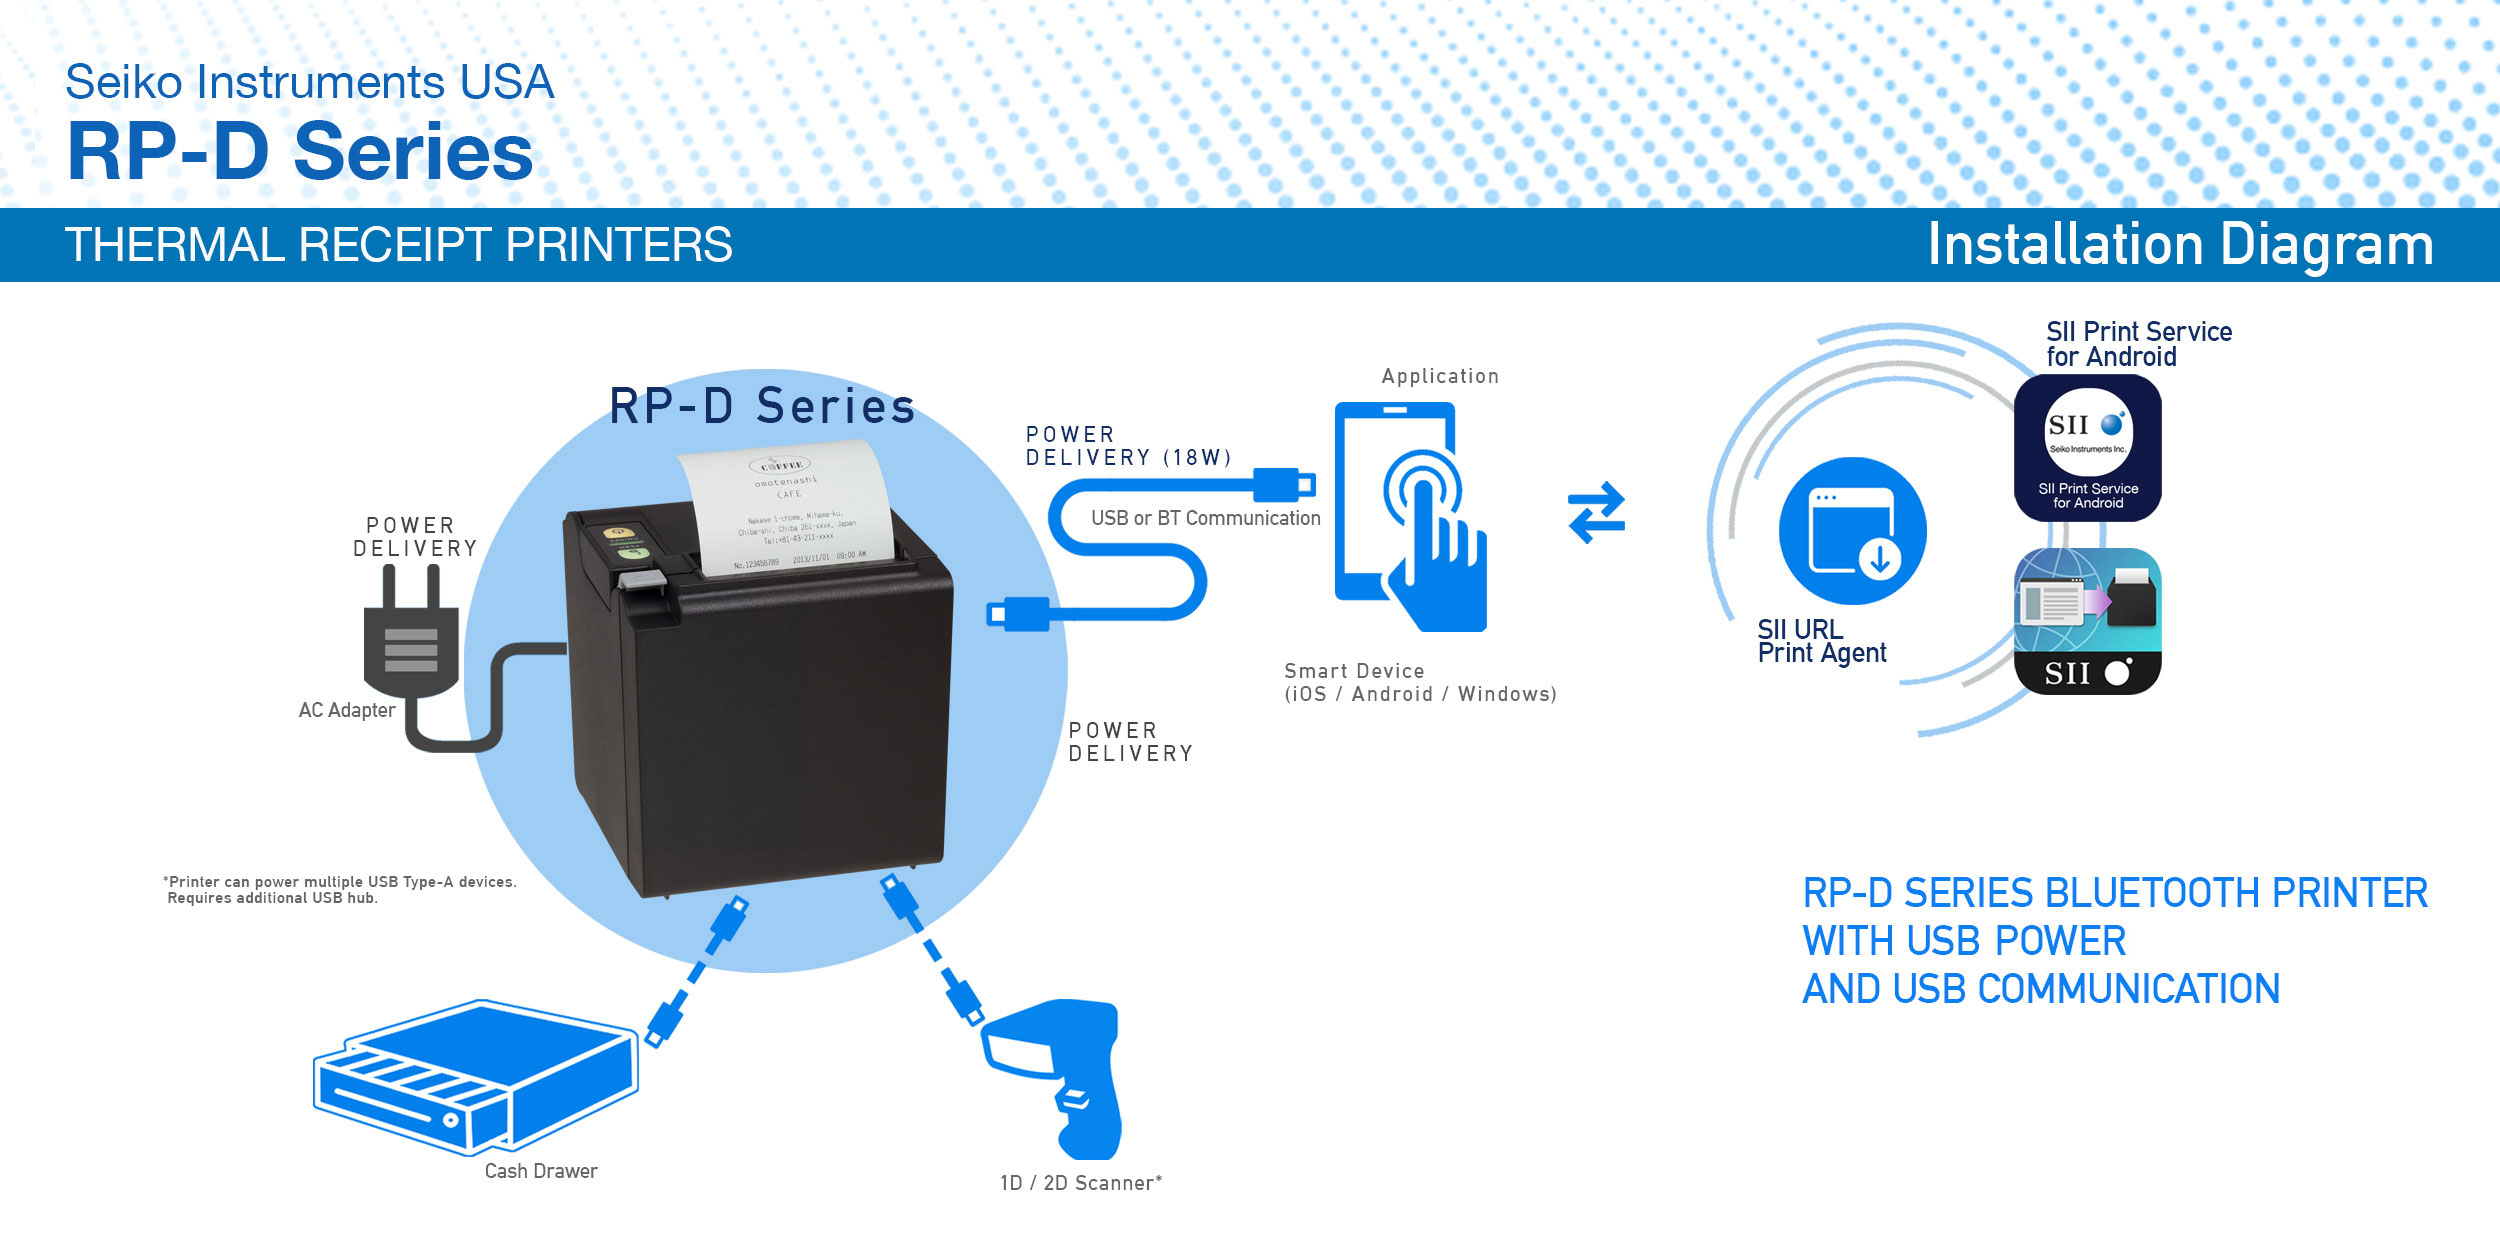 RP-D10 Series Receipt Printers - Thermal Printers | Seiko Instruments USA